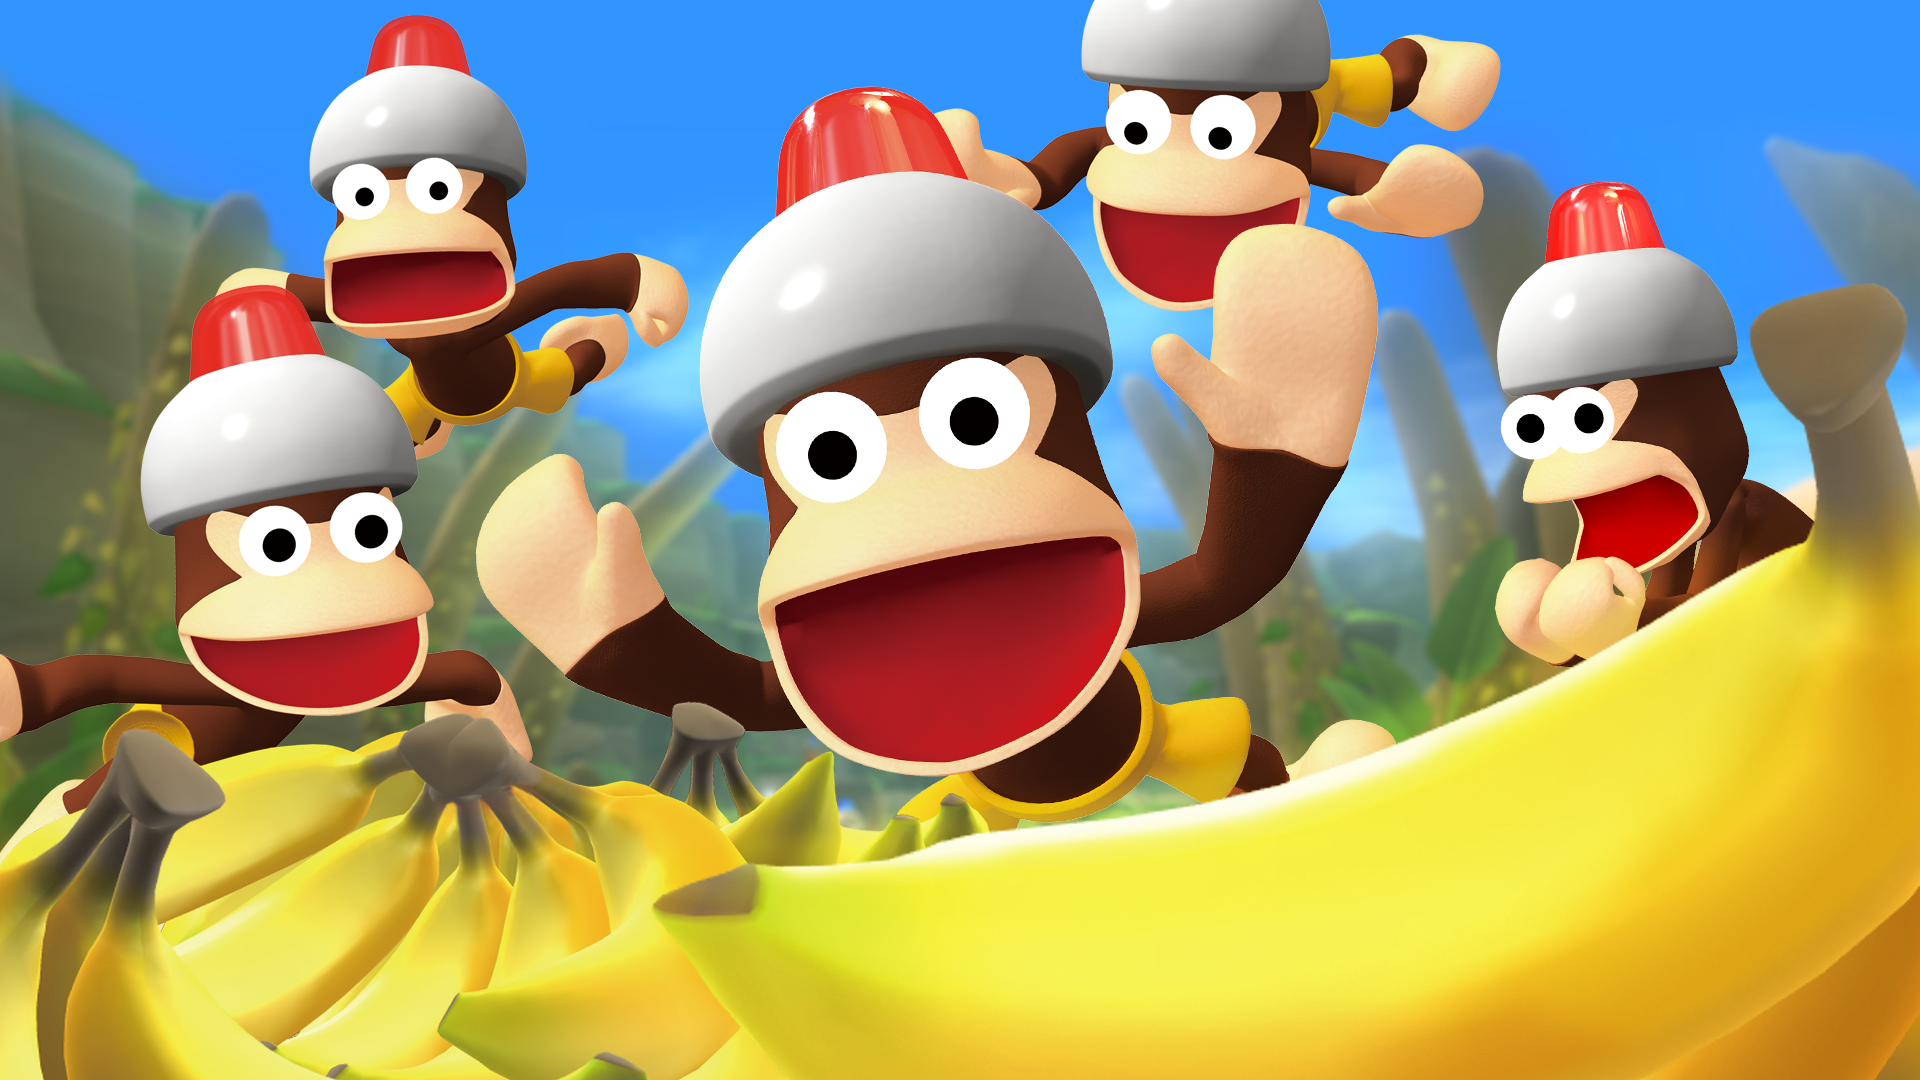 Monkeys jumping on a banana